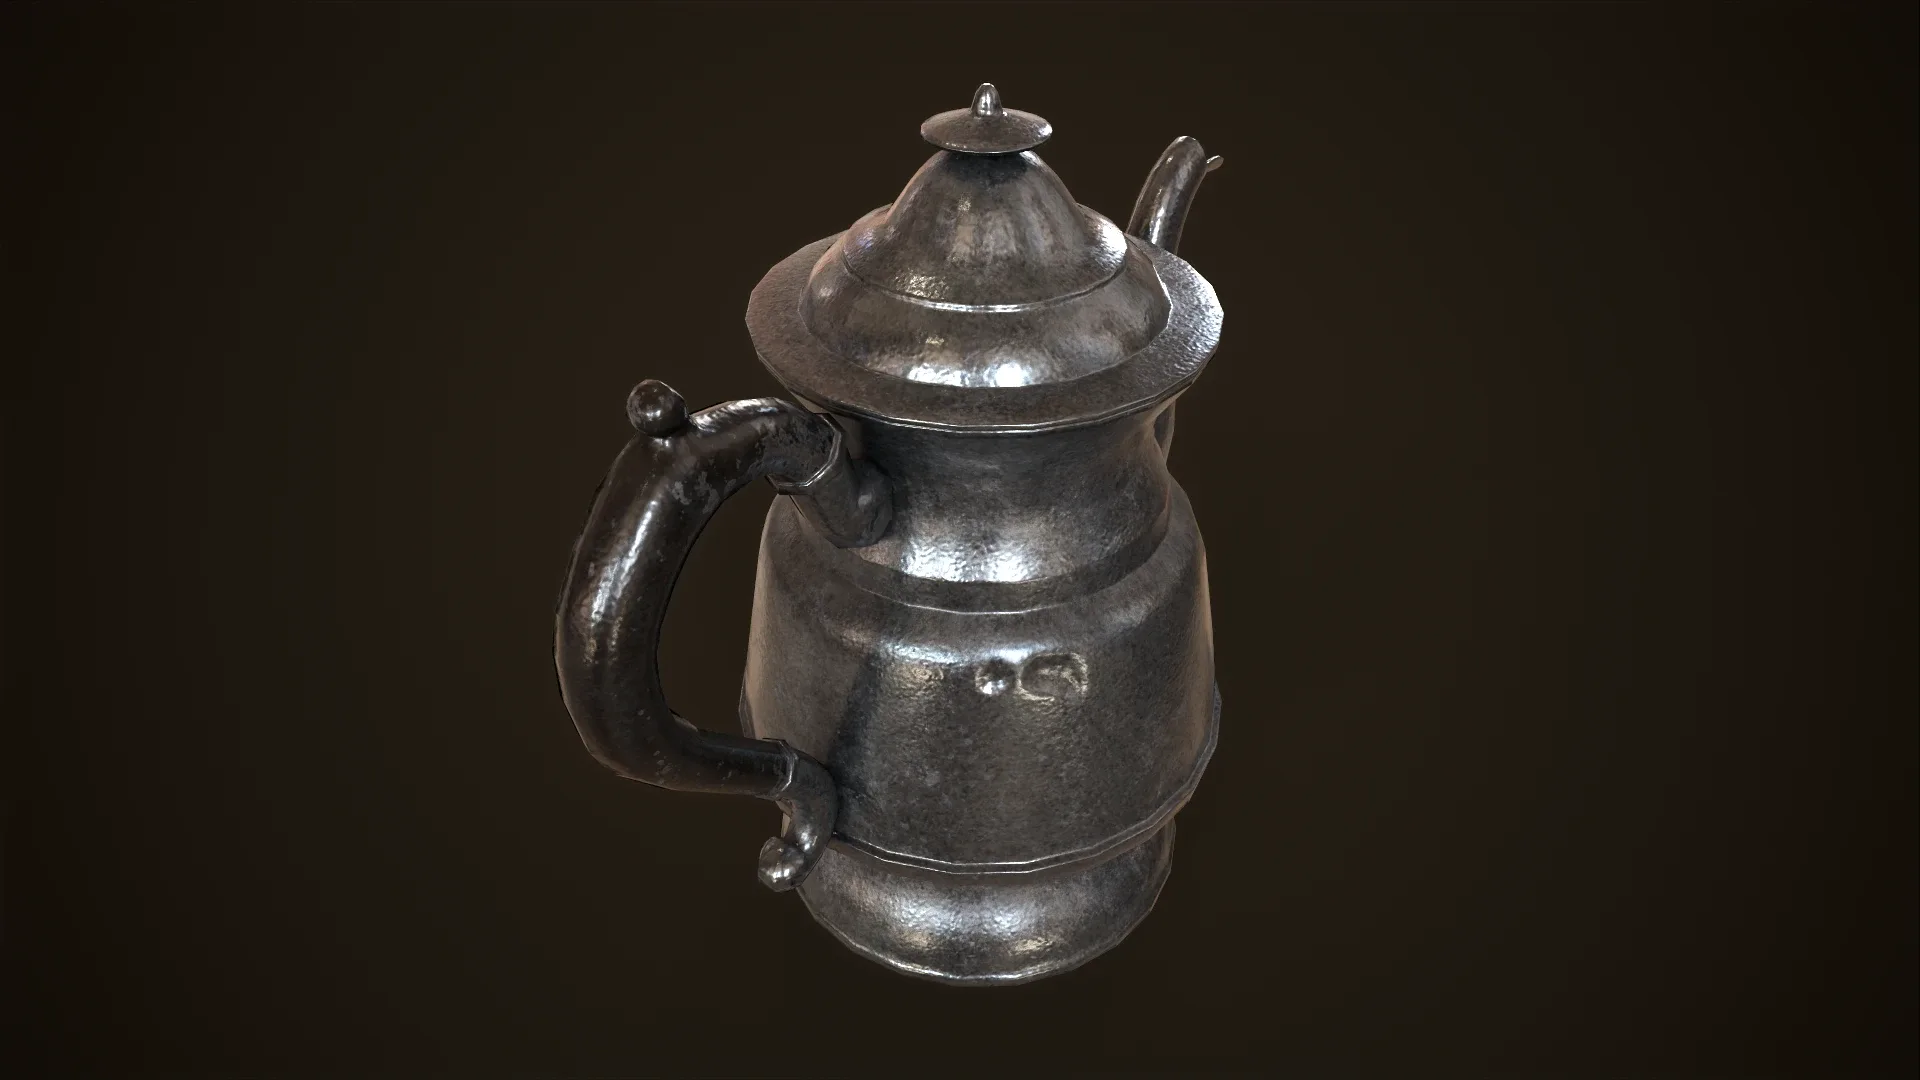 Vintage metal teapot